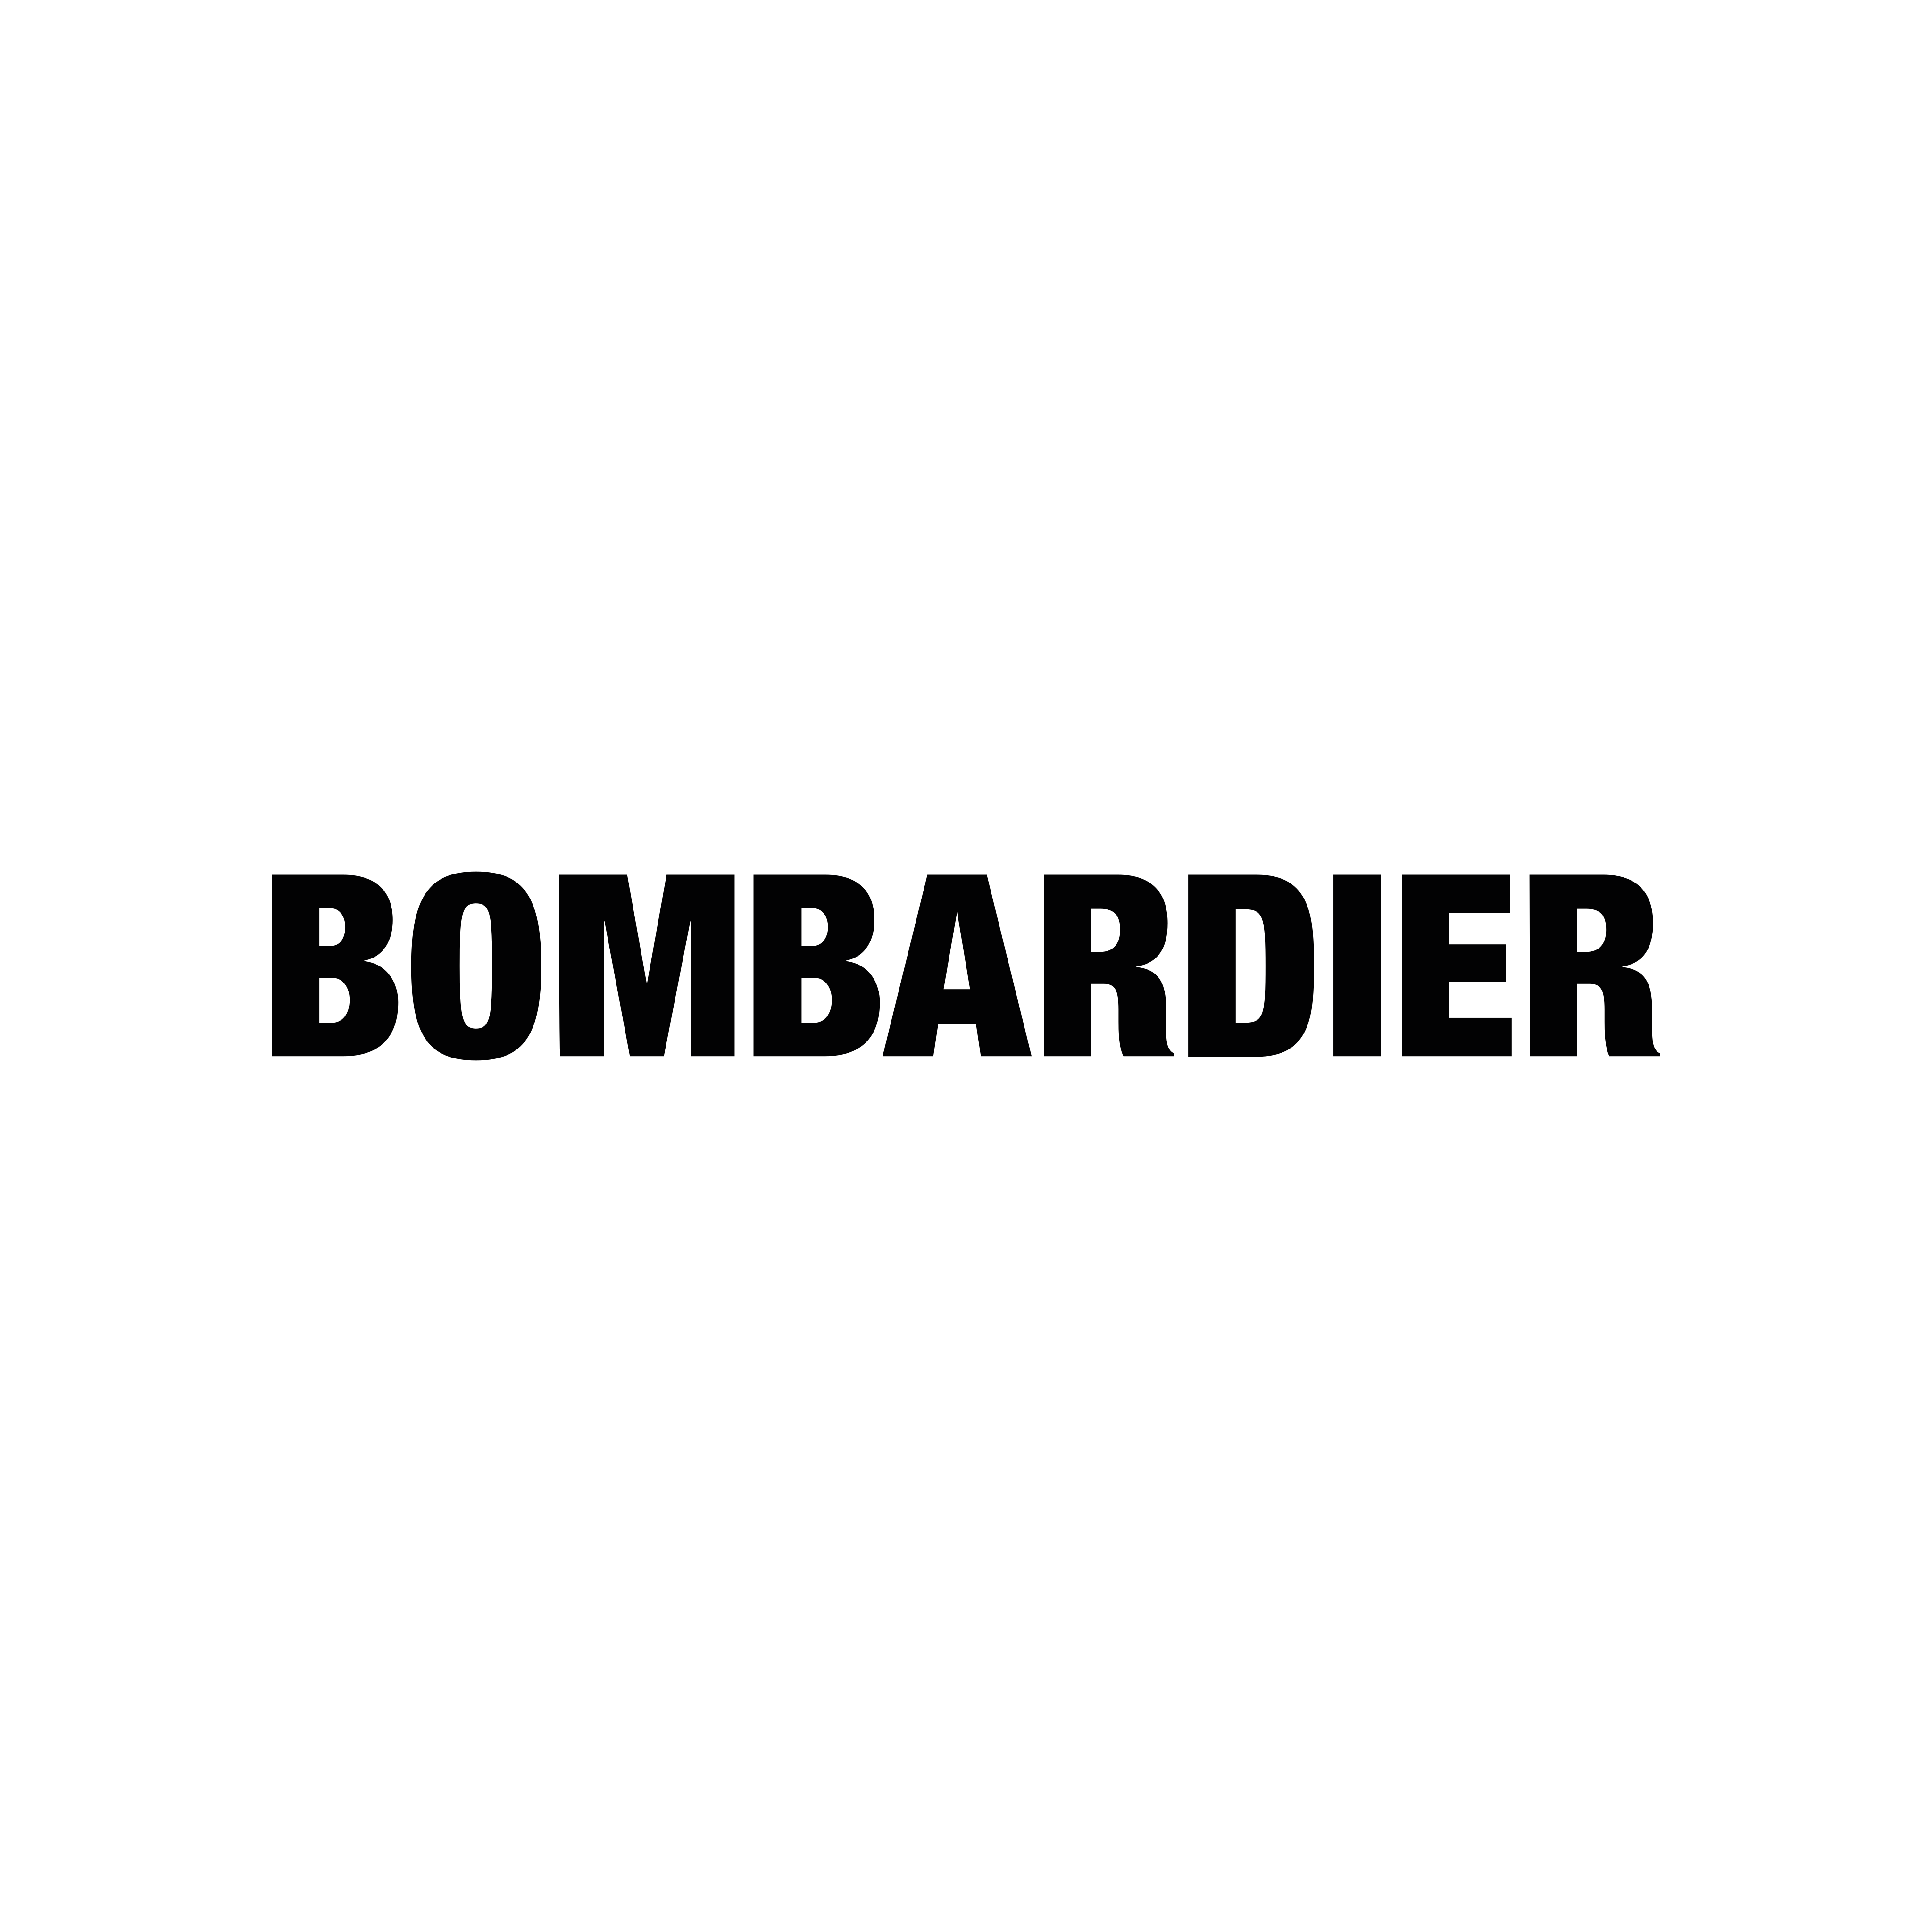 bombardier logo 0 - Bombardier Logo